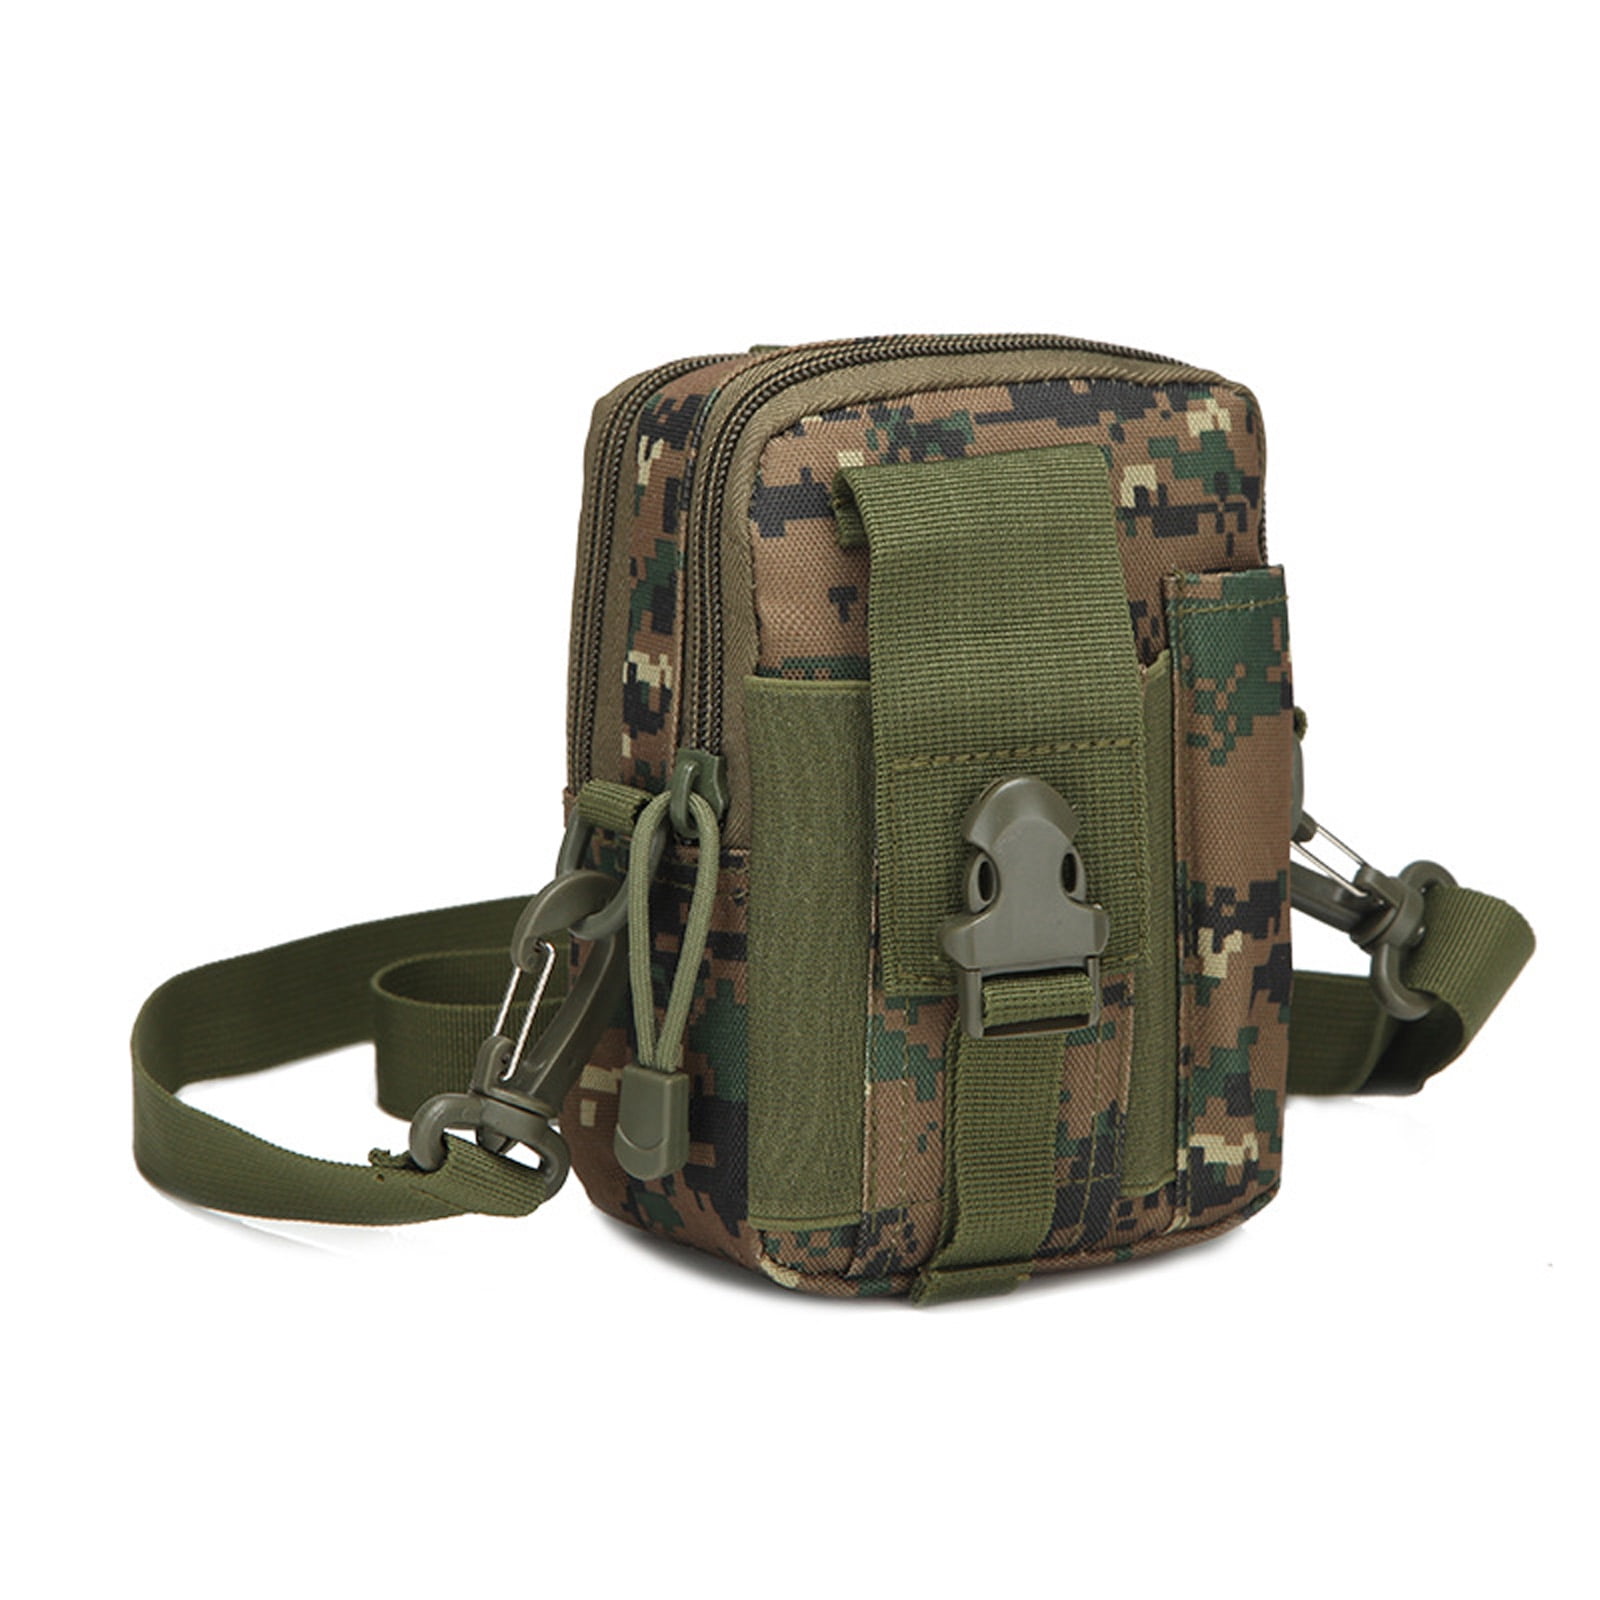 DM Maker Unisex Travel Backpacks Dirt-Resistant Shoulder Bag Daypack Rucksack for Running